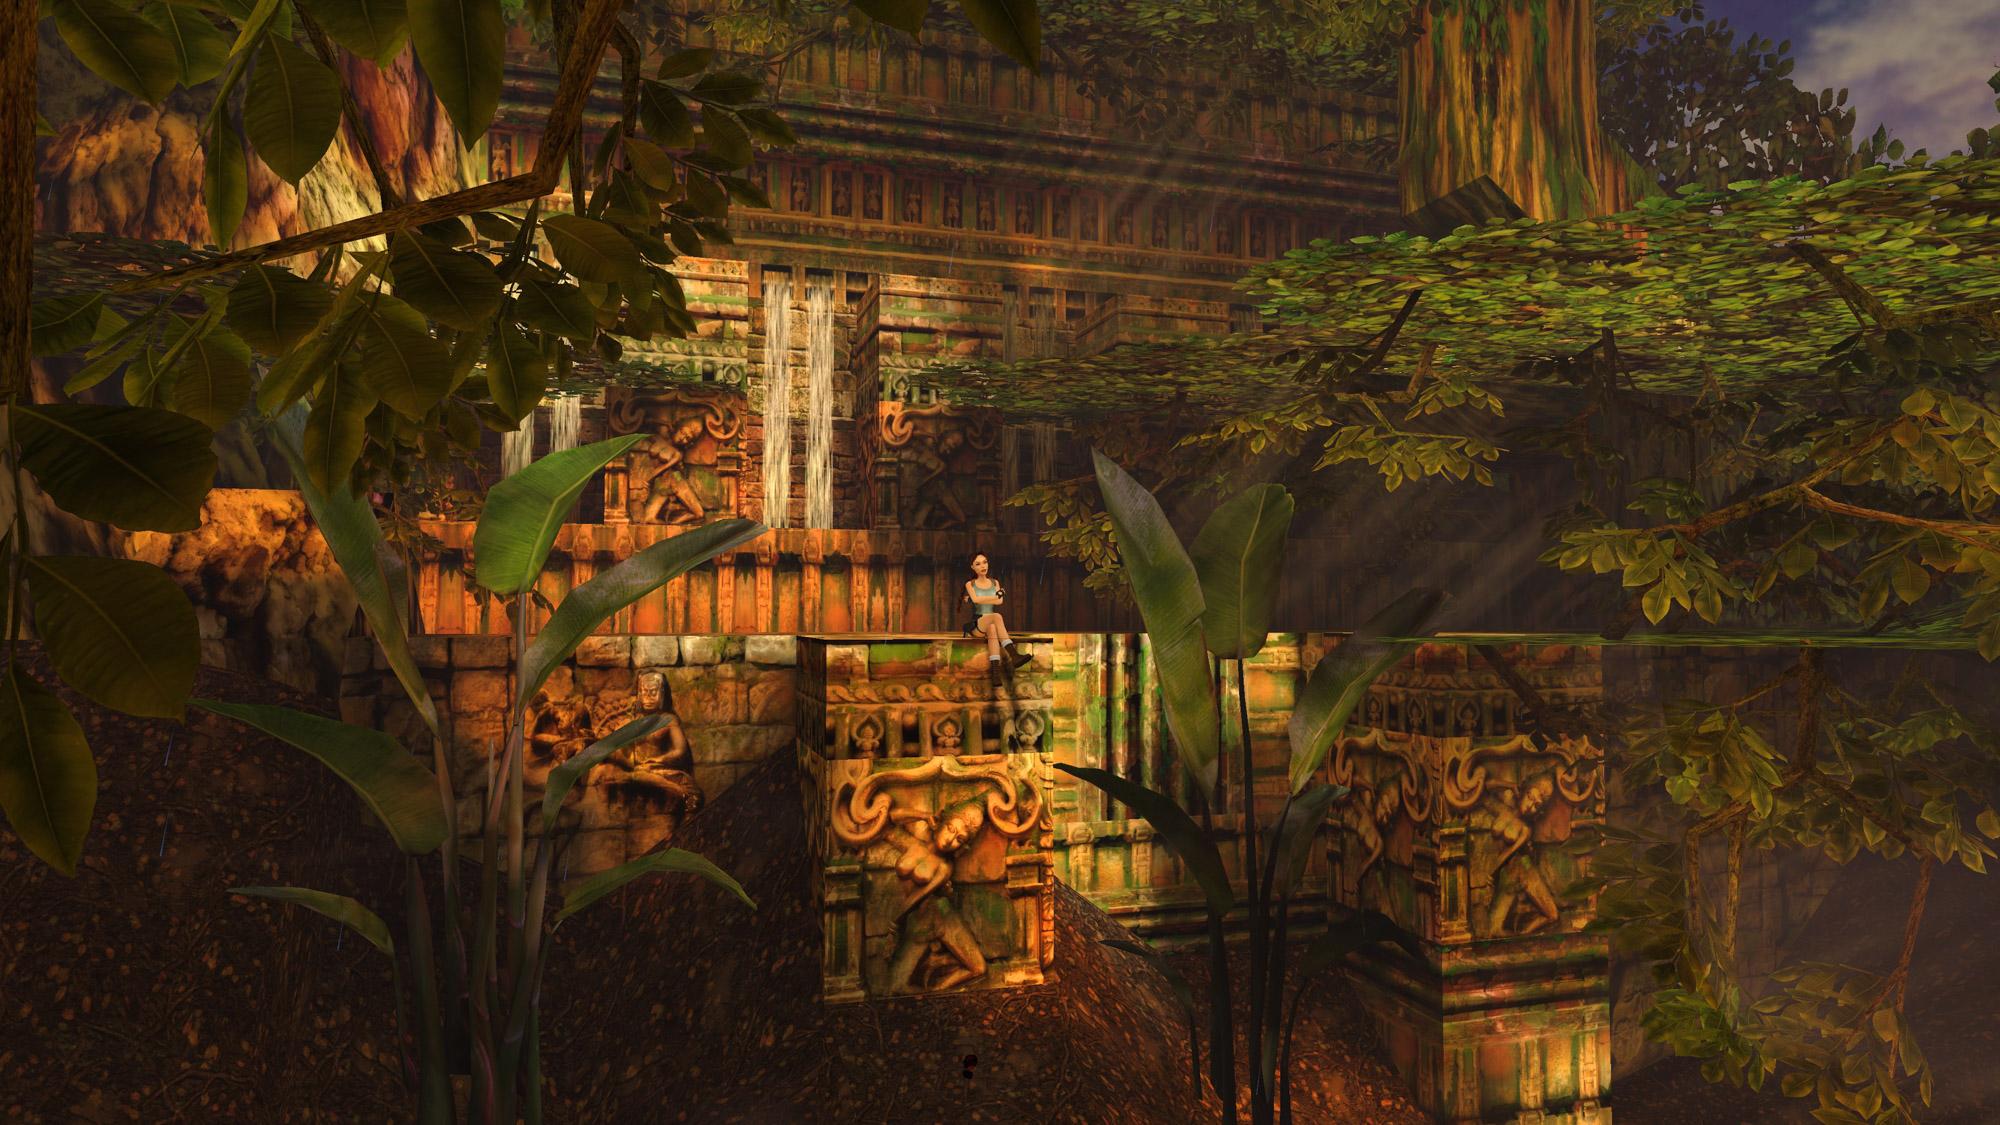 Lara Croft admiring the view in an Indian Jungle.